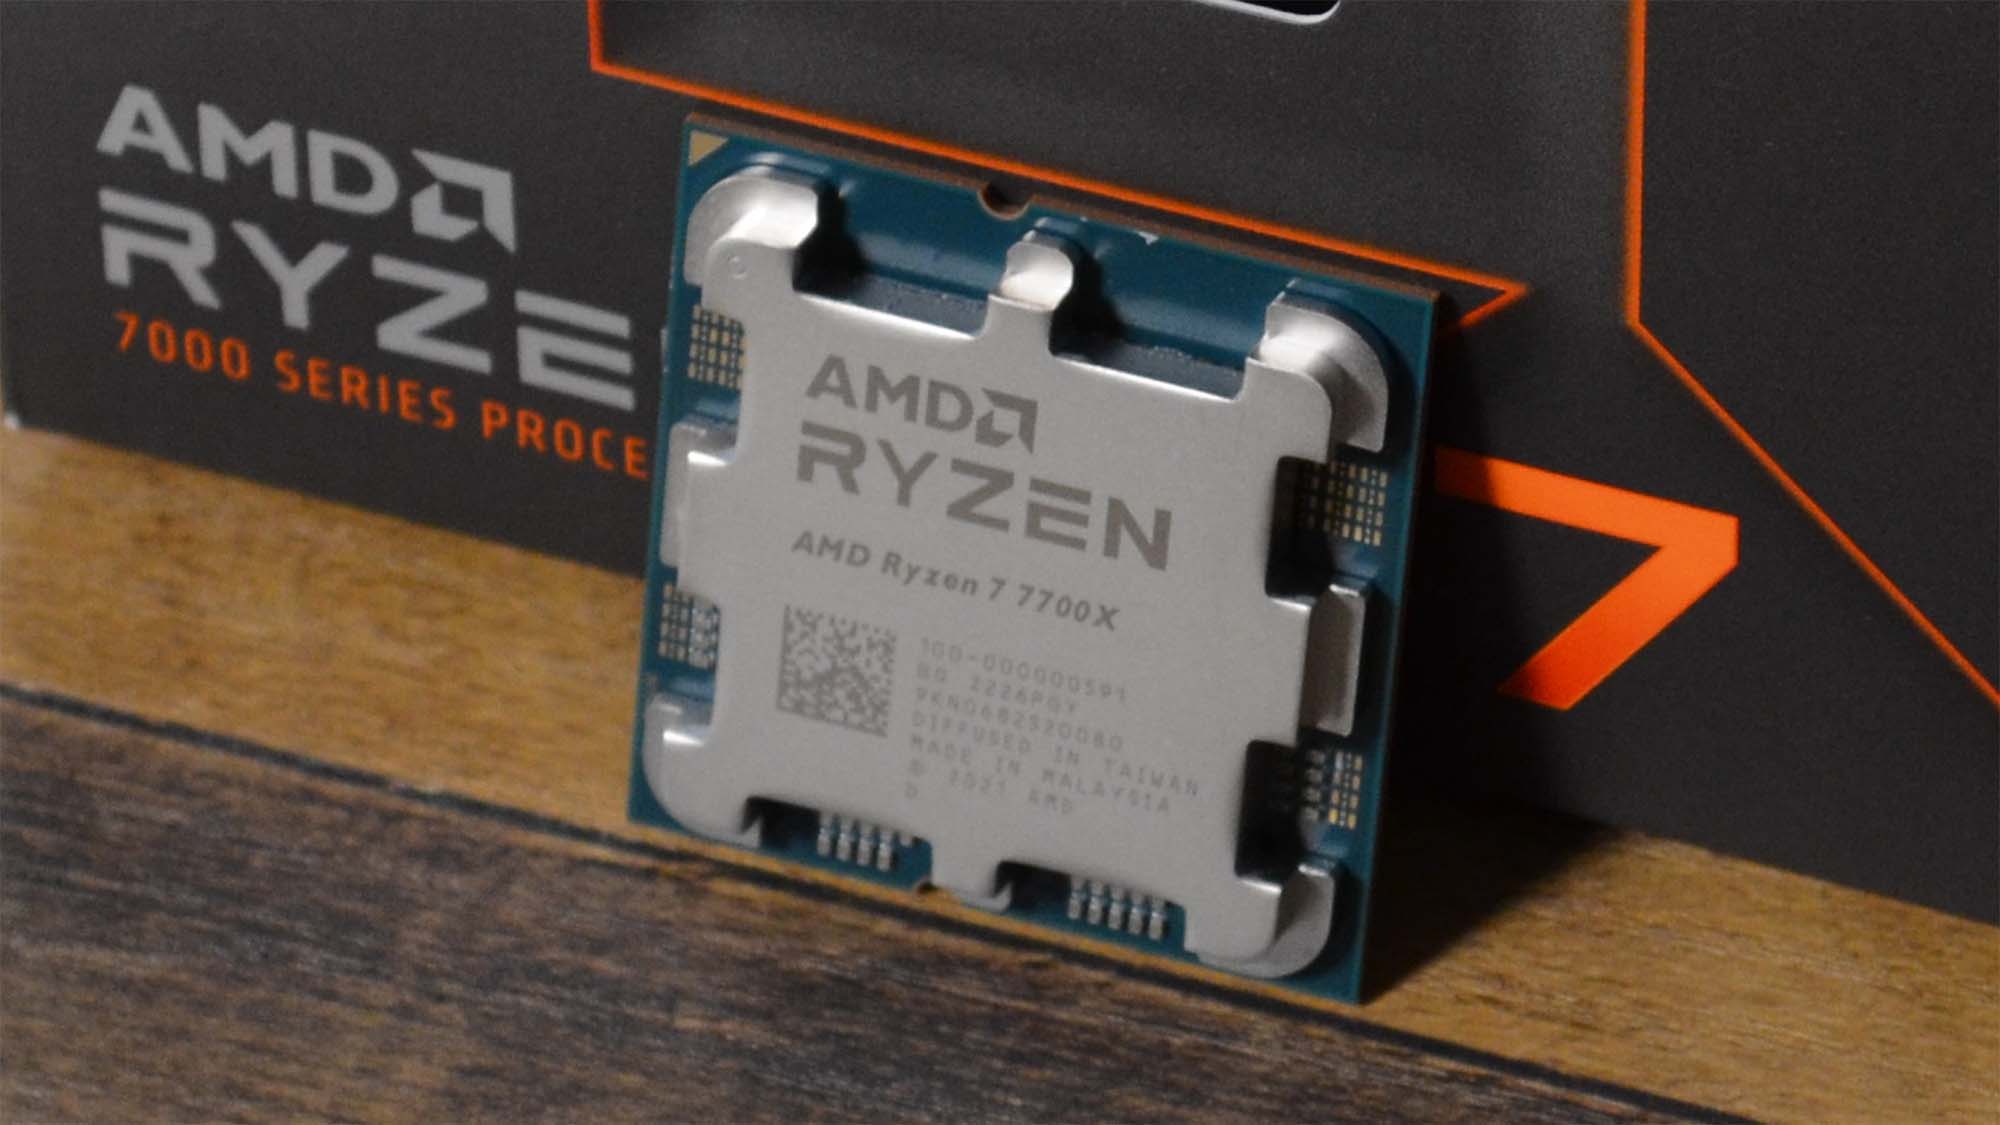 AMD Ryzen 7 7700 processor review (Page 9)